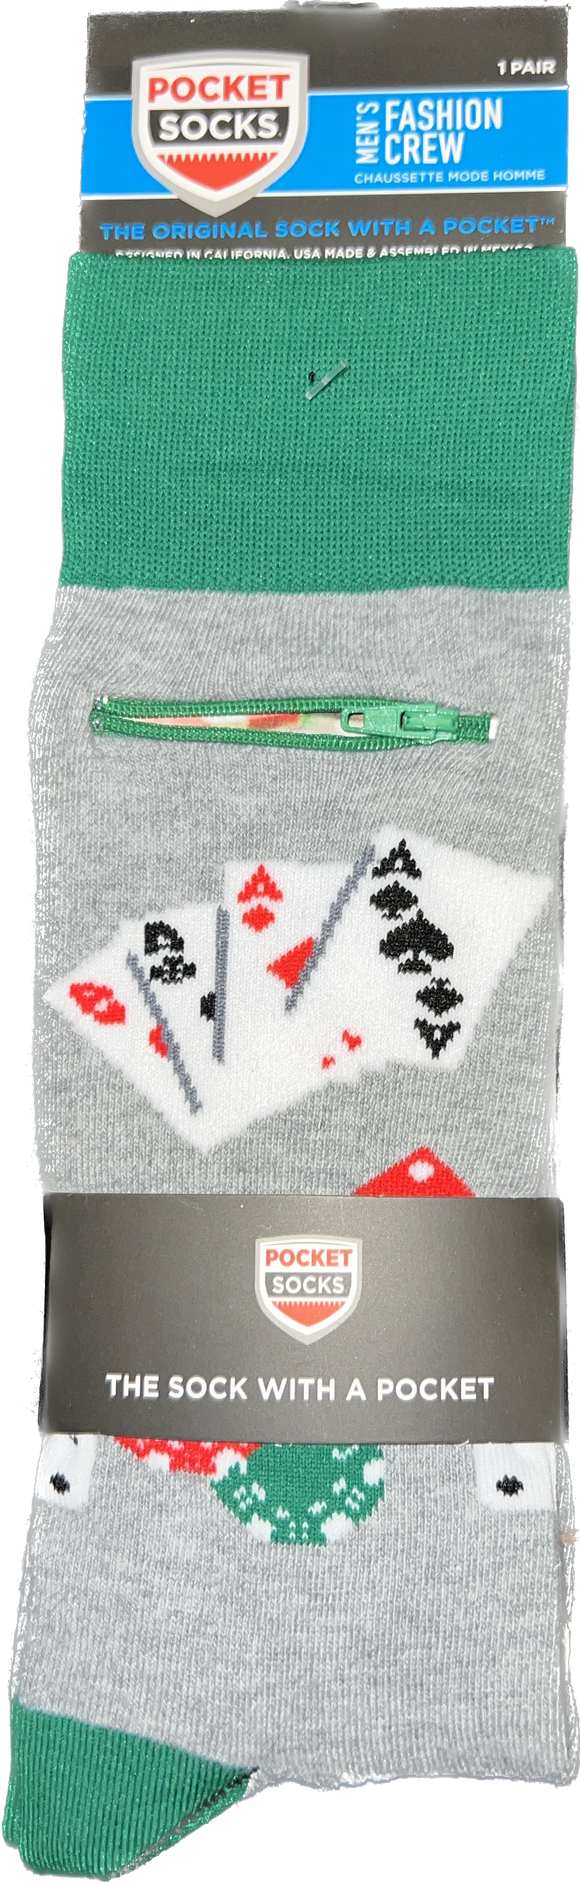 Pocket Socks Poker Cards with Zipper